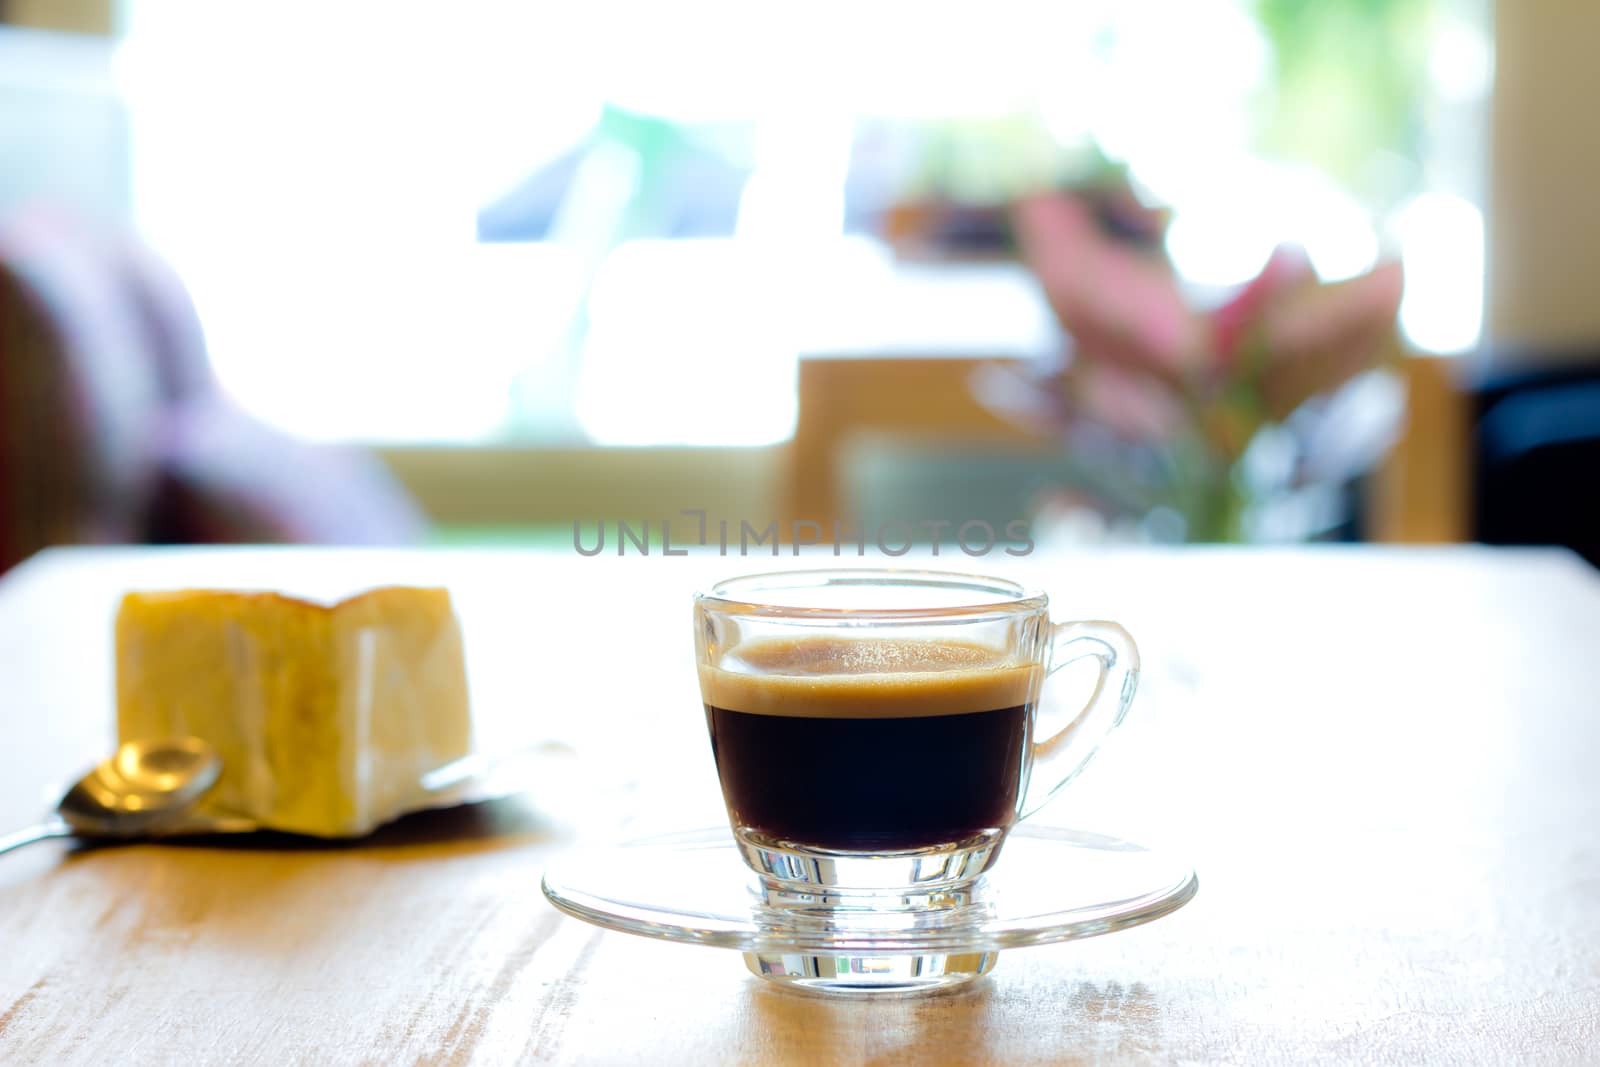 Hot coffee on wood by wyoosumran